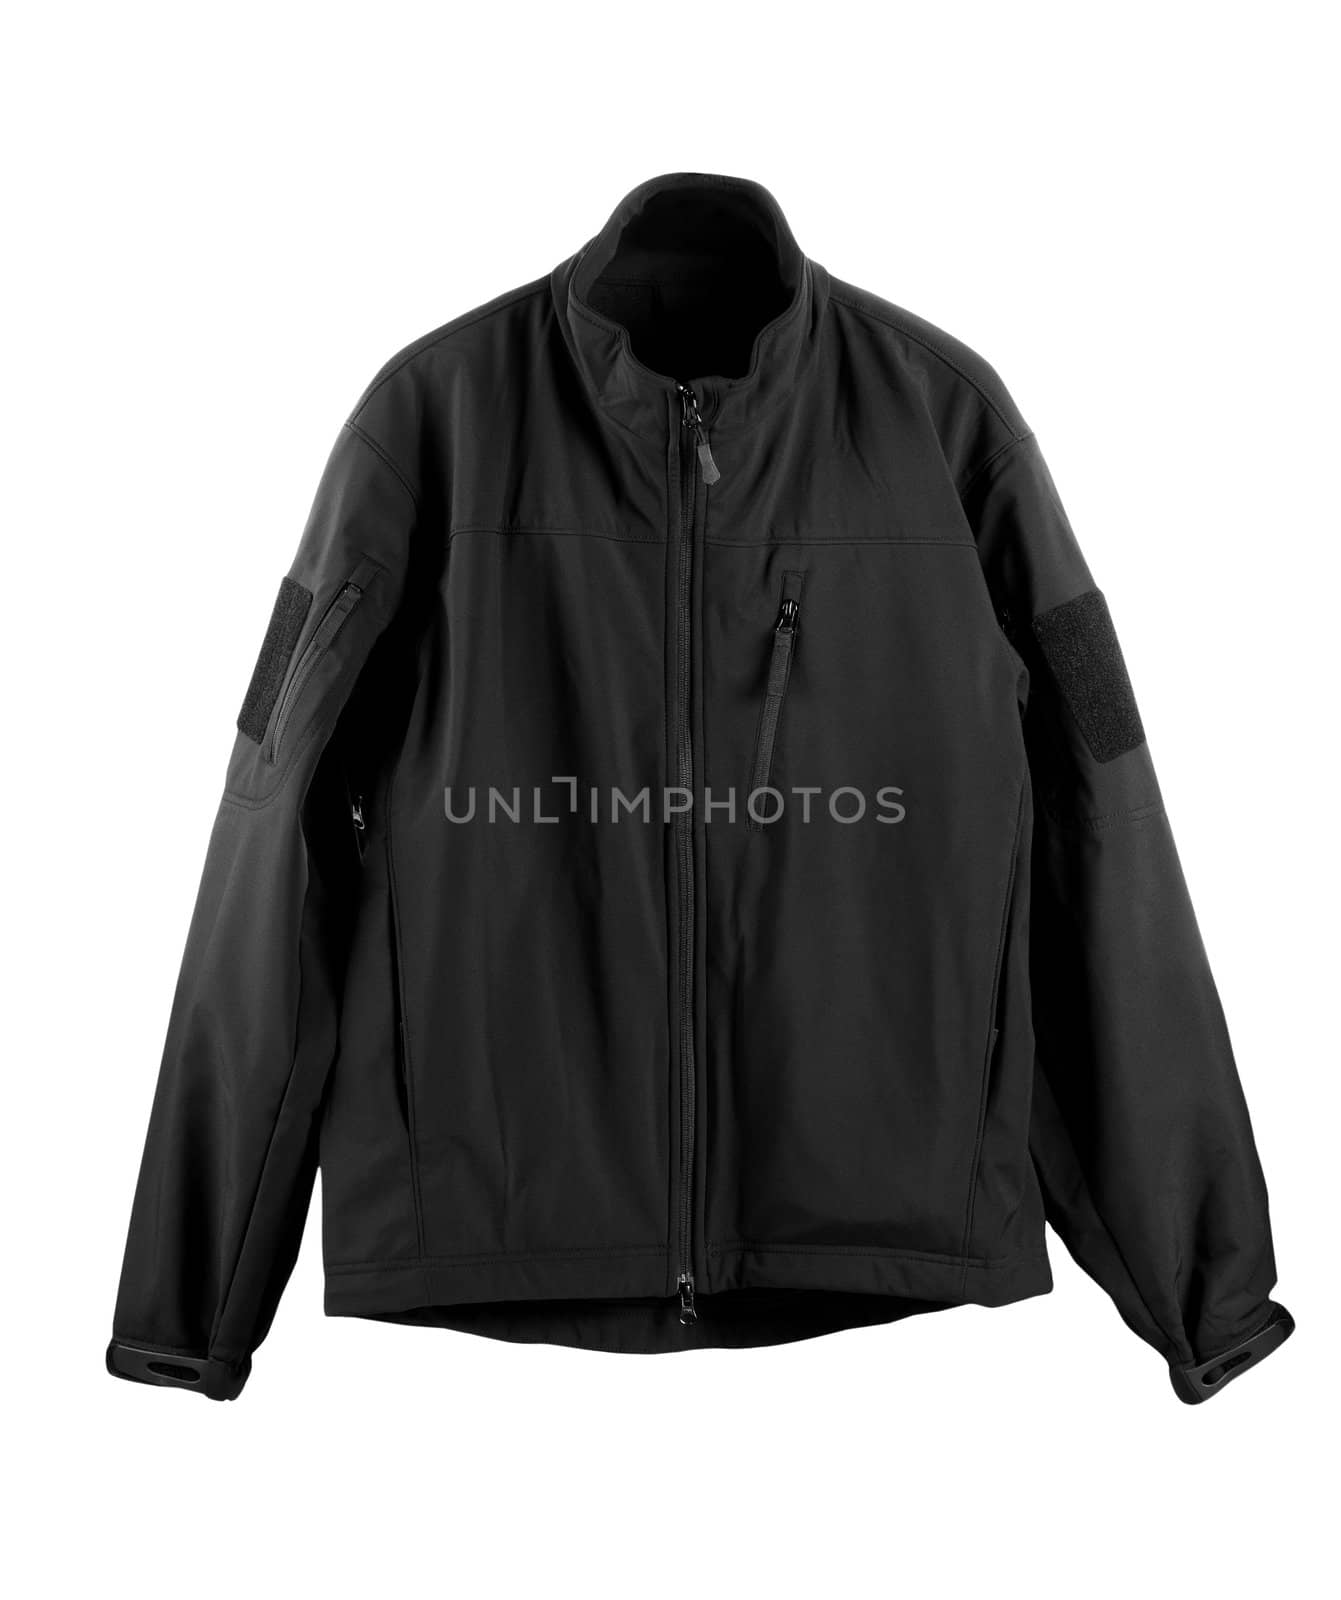 Black jacket by Givaga